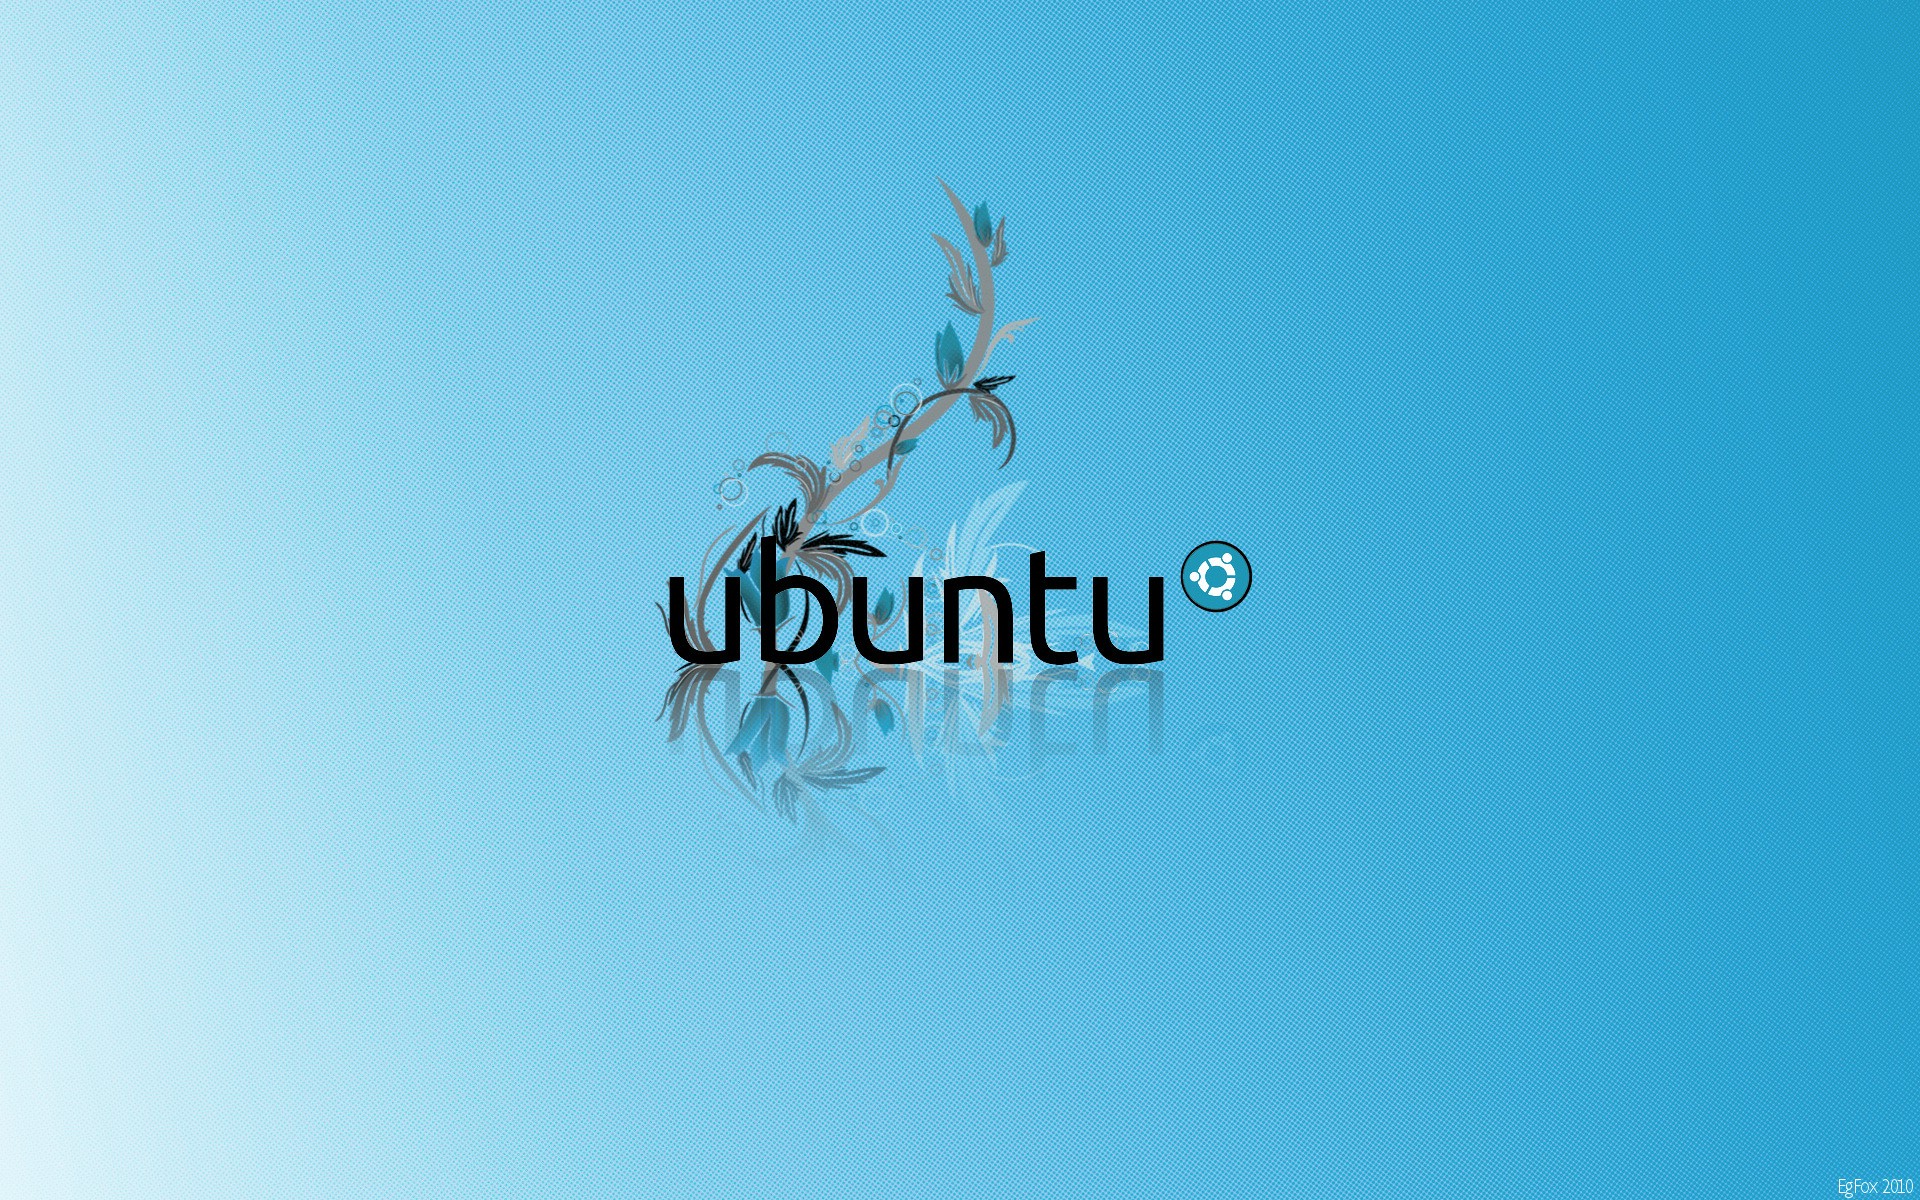 Linux, Ubuntu, gnu, GNU/Linux - desktop wallpaper